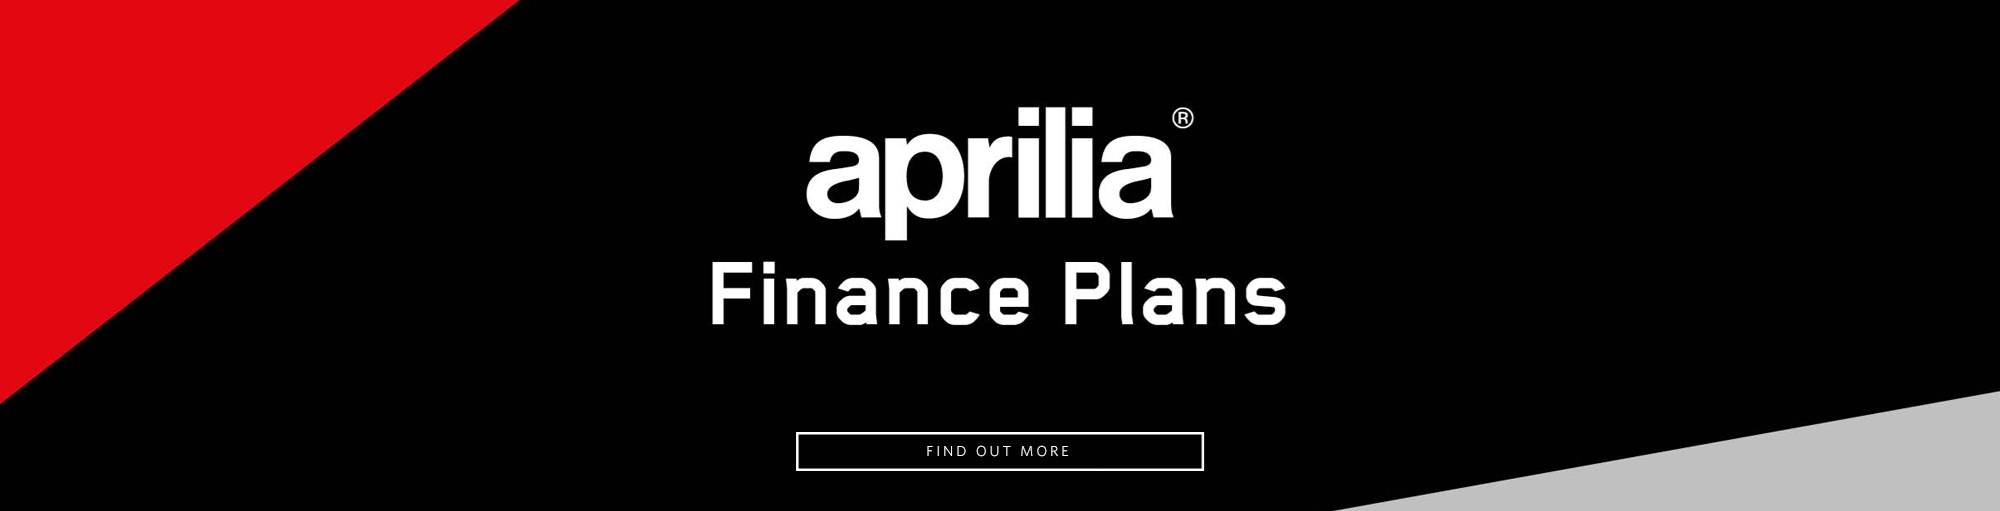 Aprilia Finance